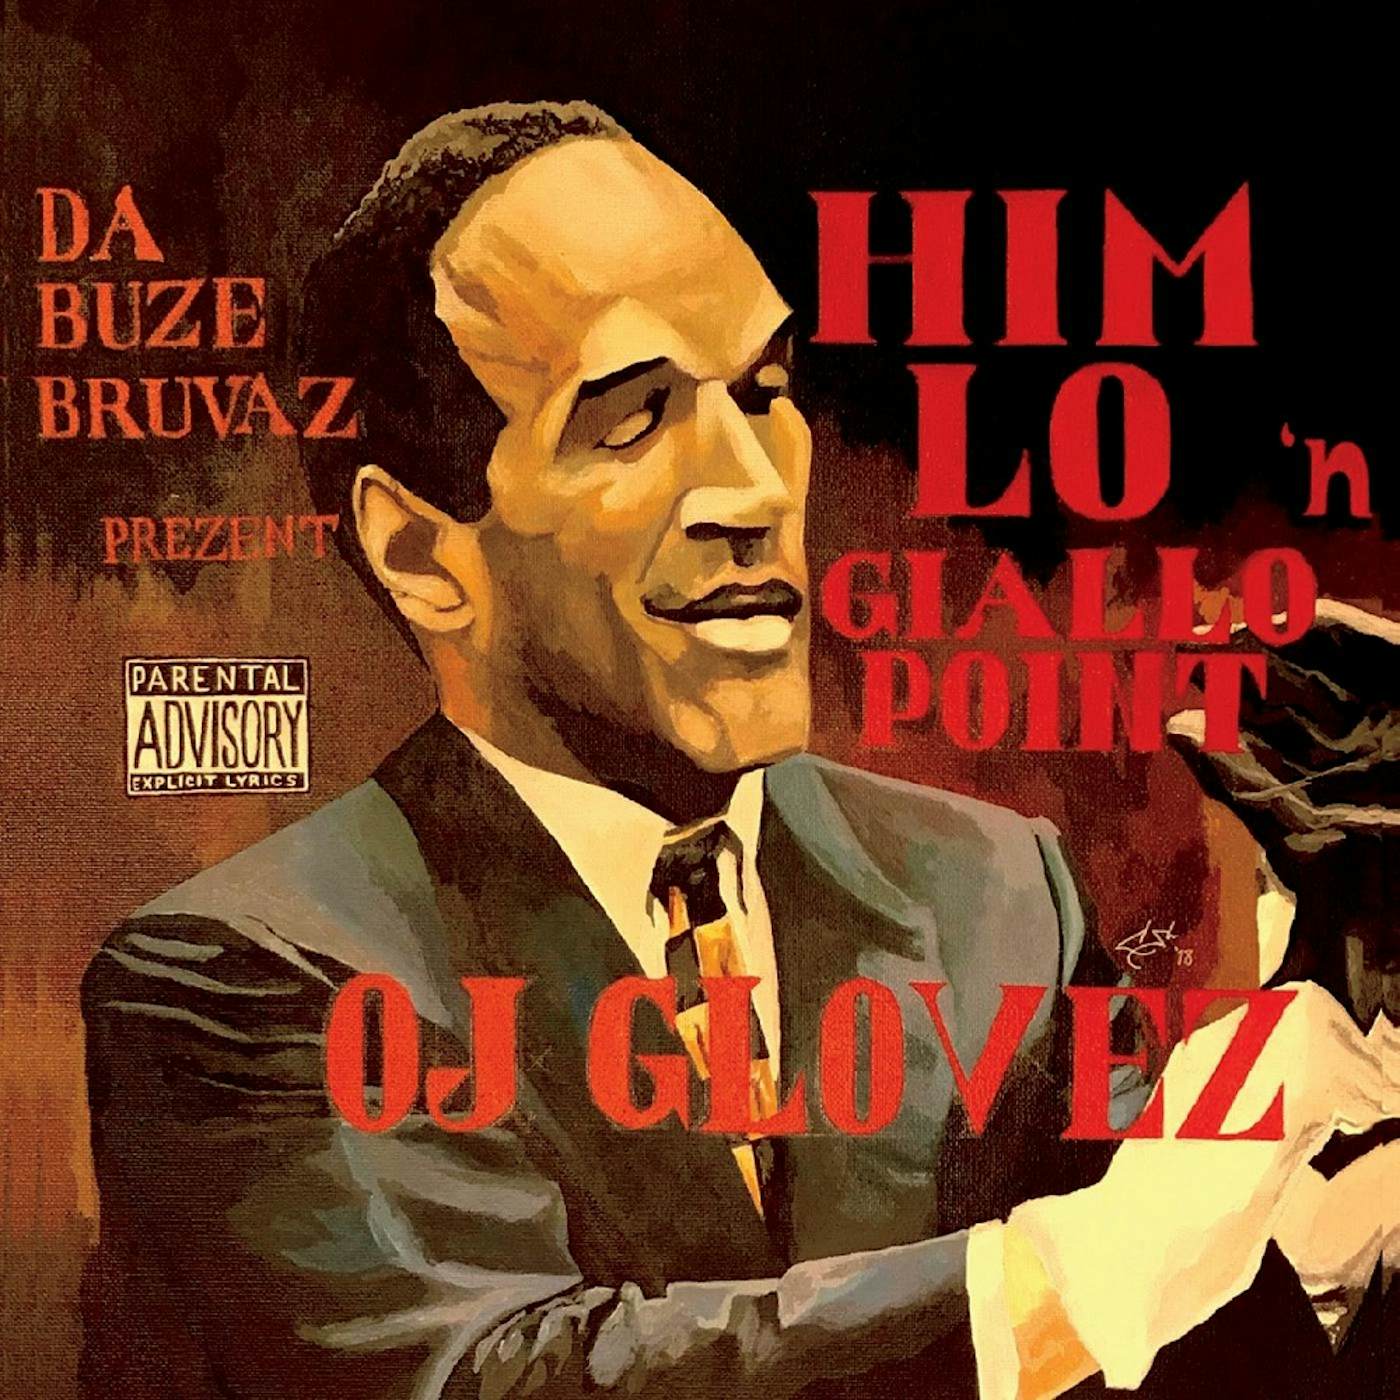 Da Buze Bruvaz Prezent: Him Lo & Giallo Point OJ GLOVEZ Vinyl Record